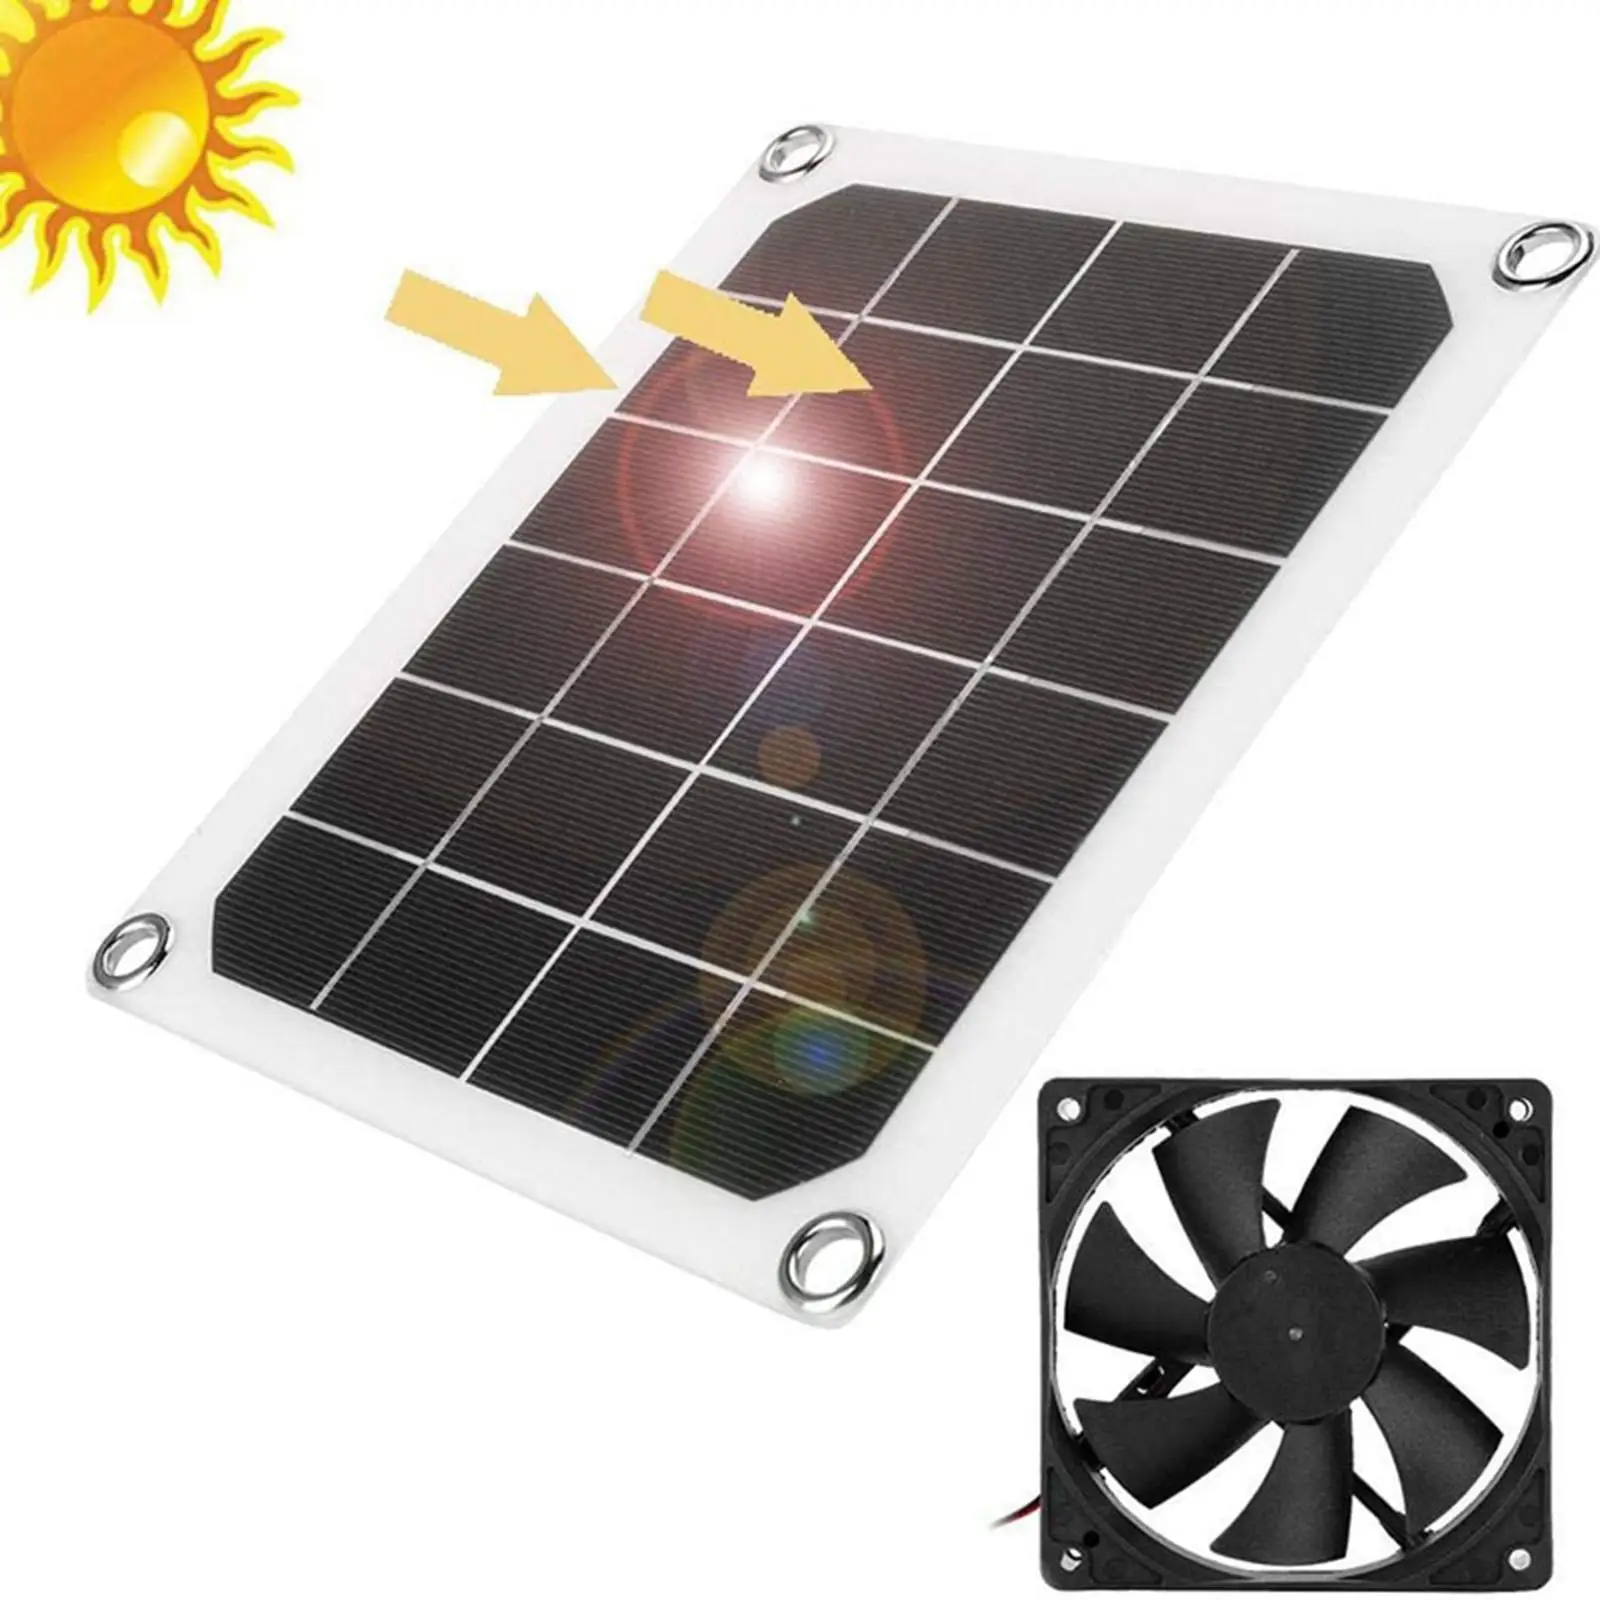 

10W Solar Panel Powered Fan Mini Ventilator For Greenhouse Pet Chicken House